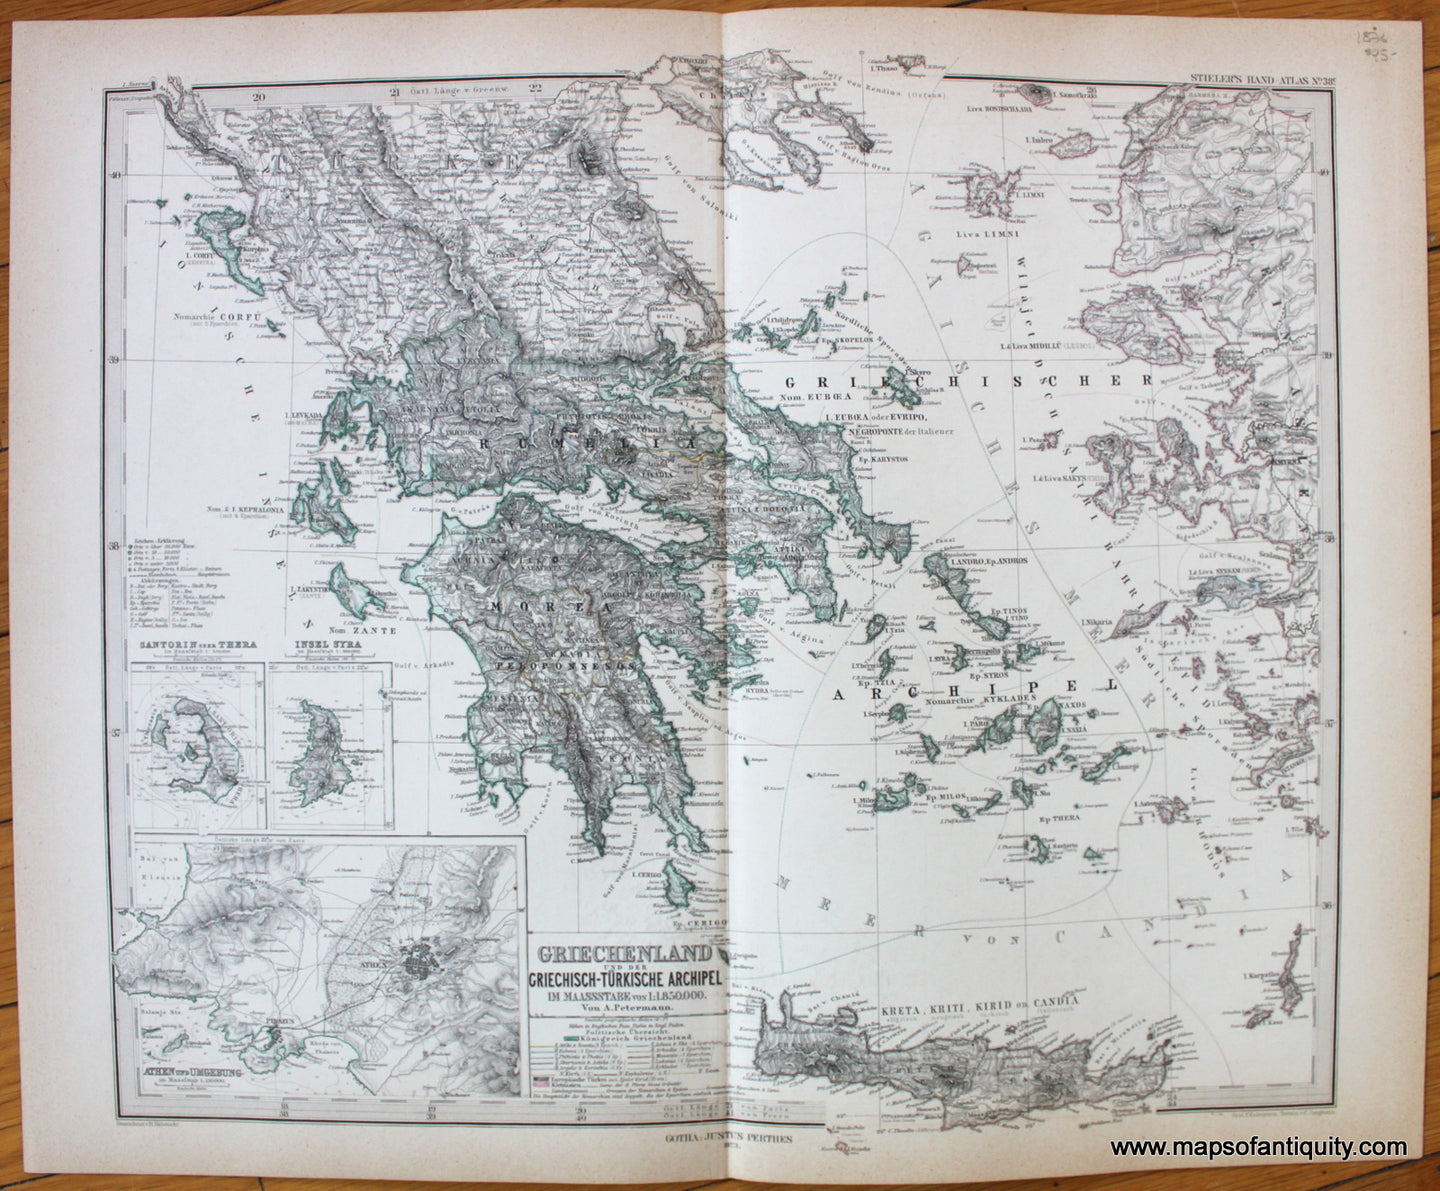 Antique-Map-Griechenland-Greece-Stieler-1876-1870s-1800s-19th-century-Maps-of-Antiquity